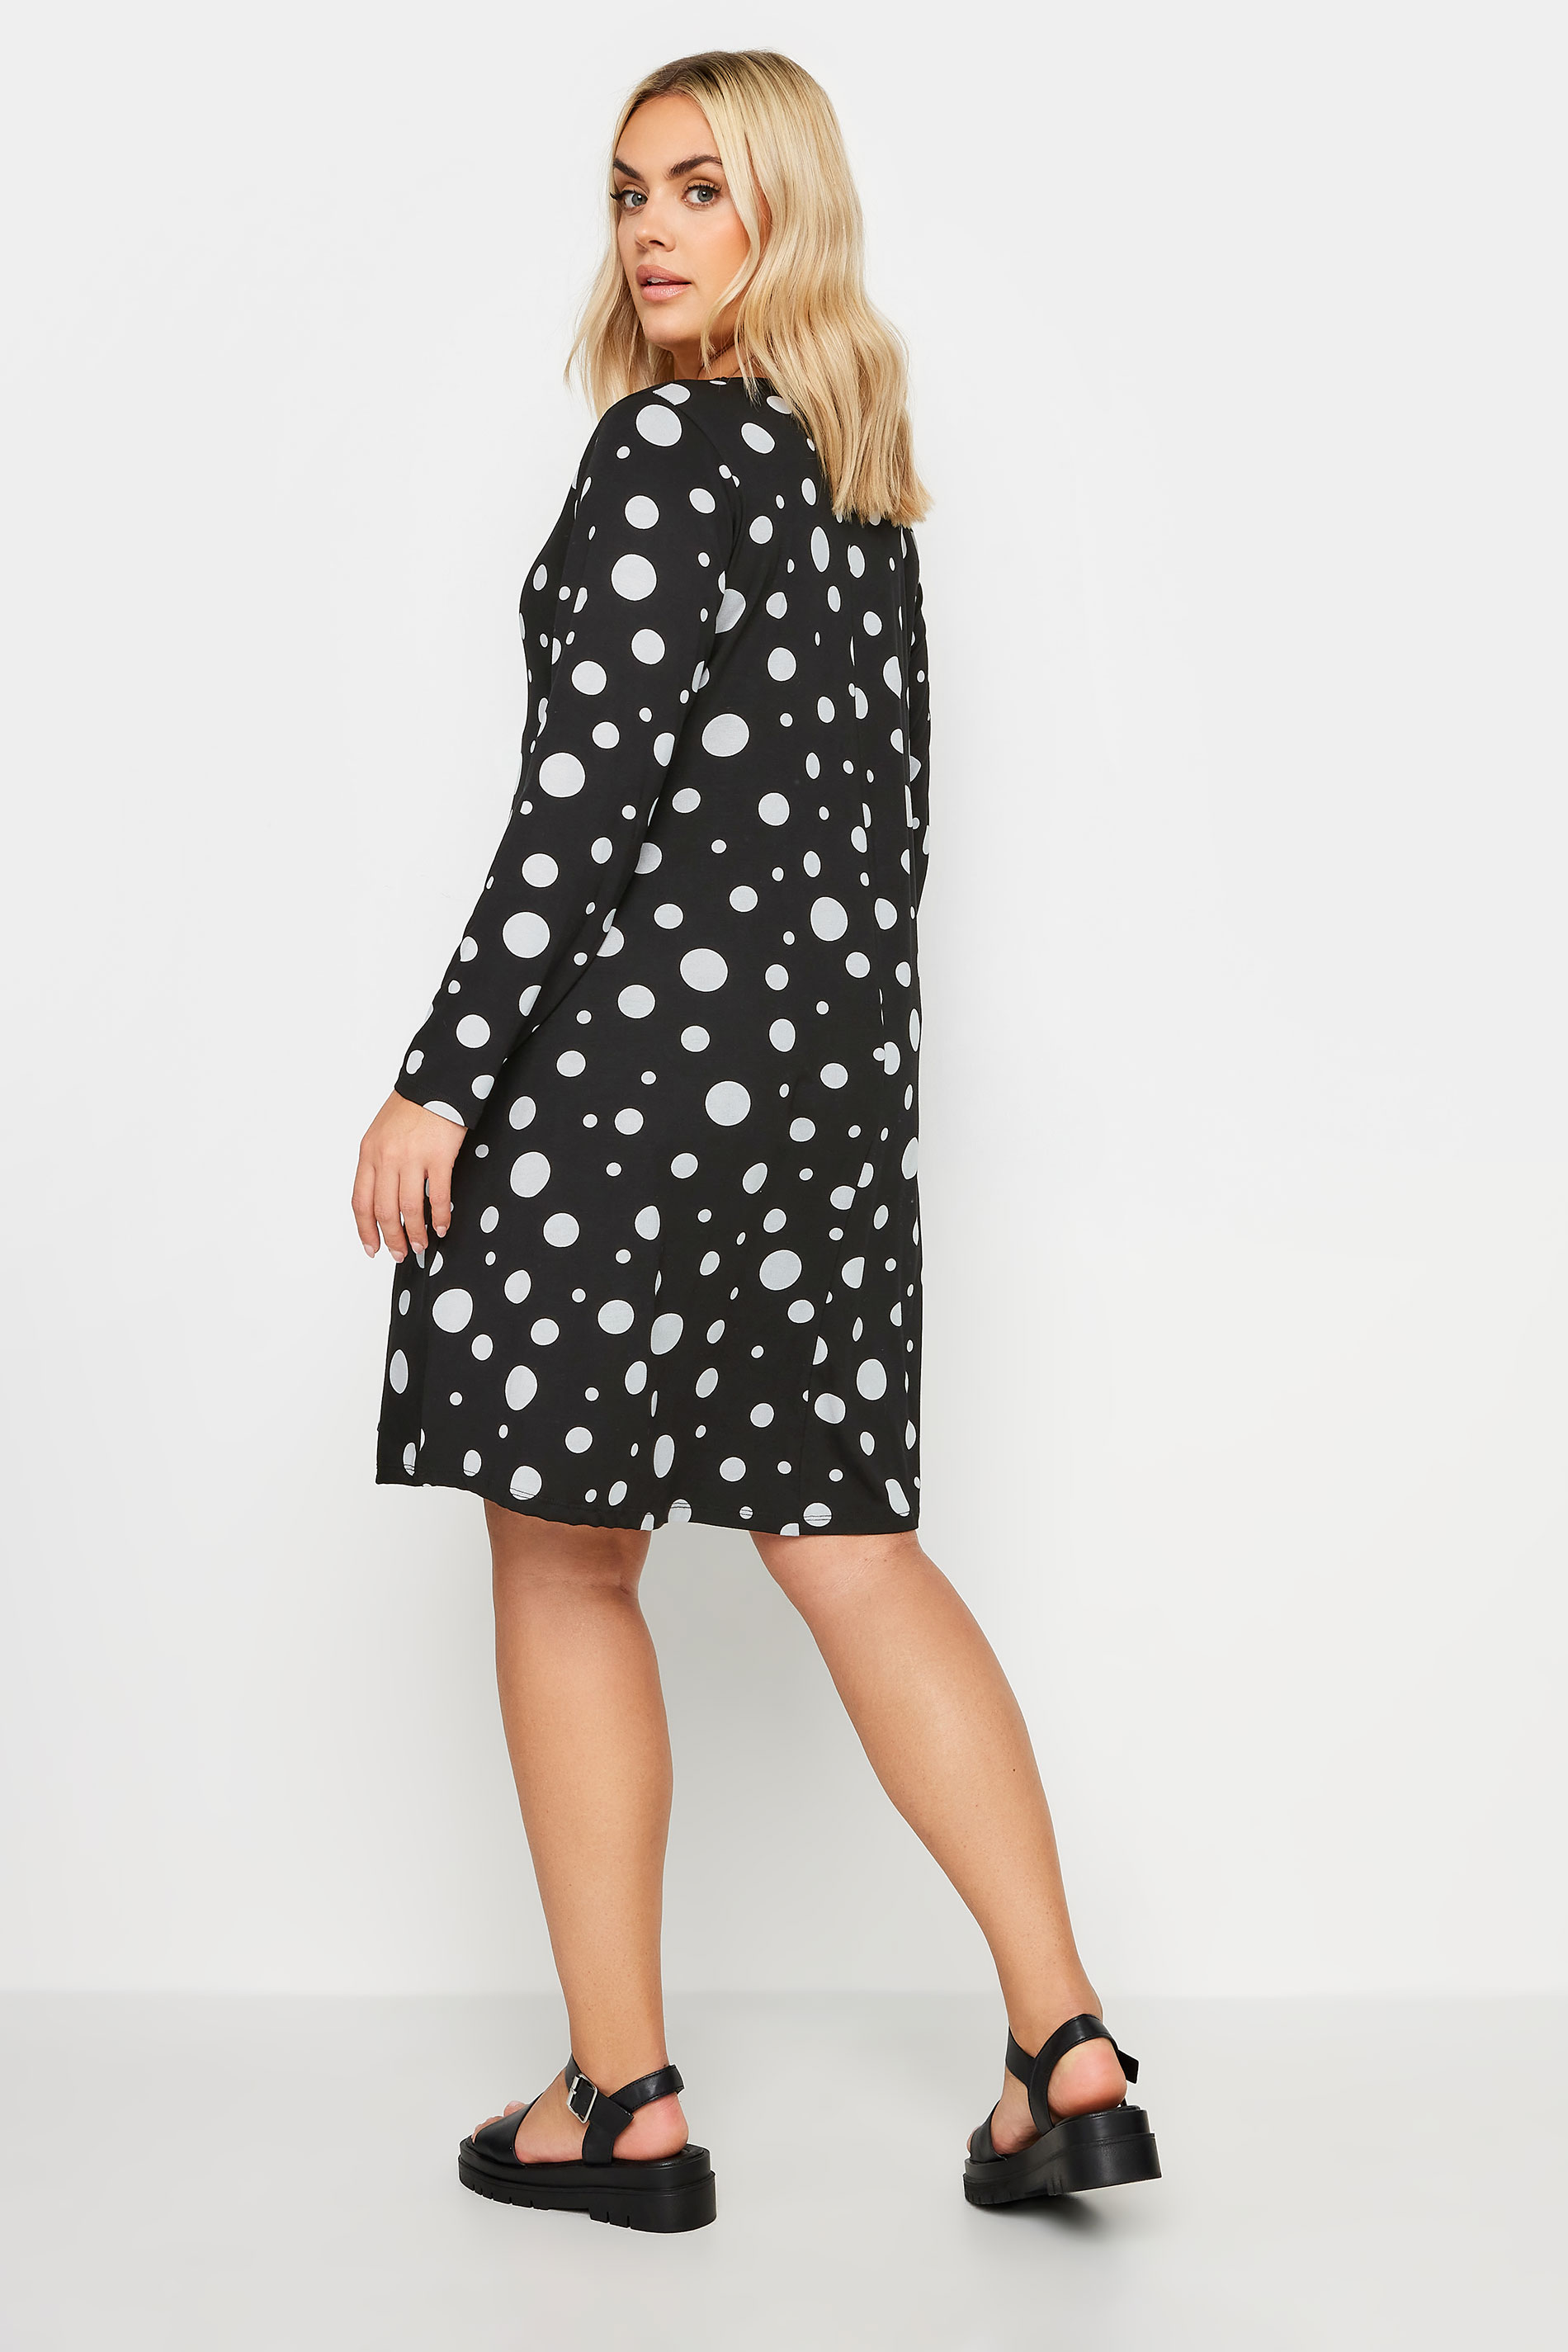 YOURS Plus Size Black Polka Dot Print Mini Dress | Yours Clothing 3